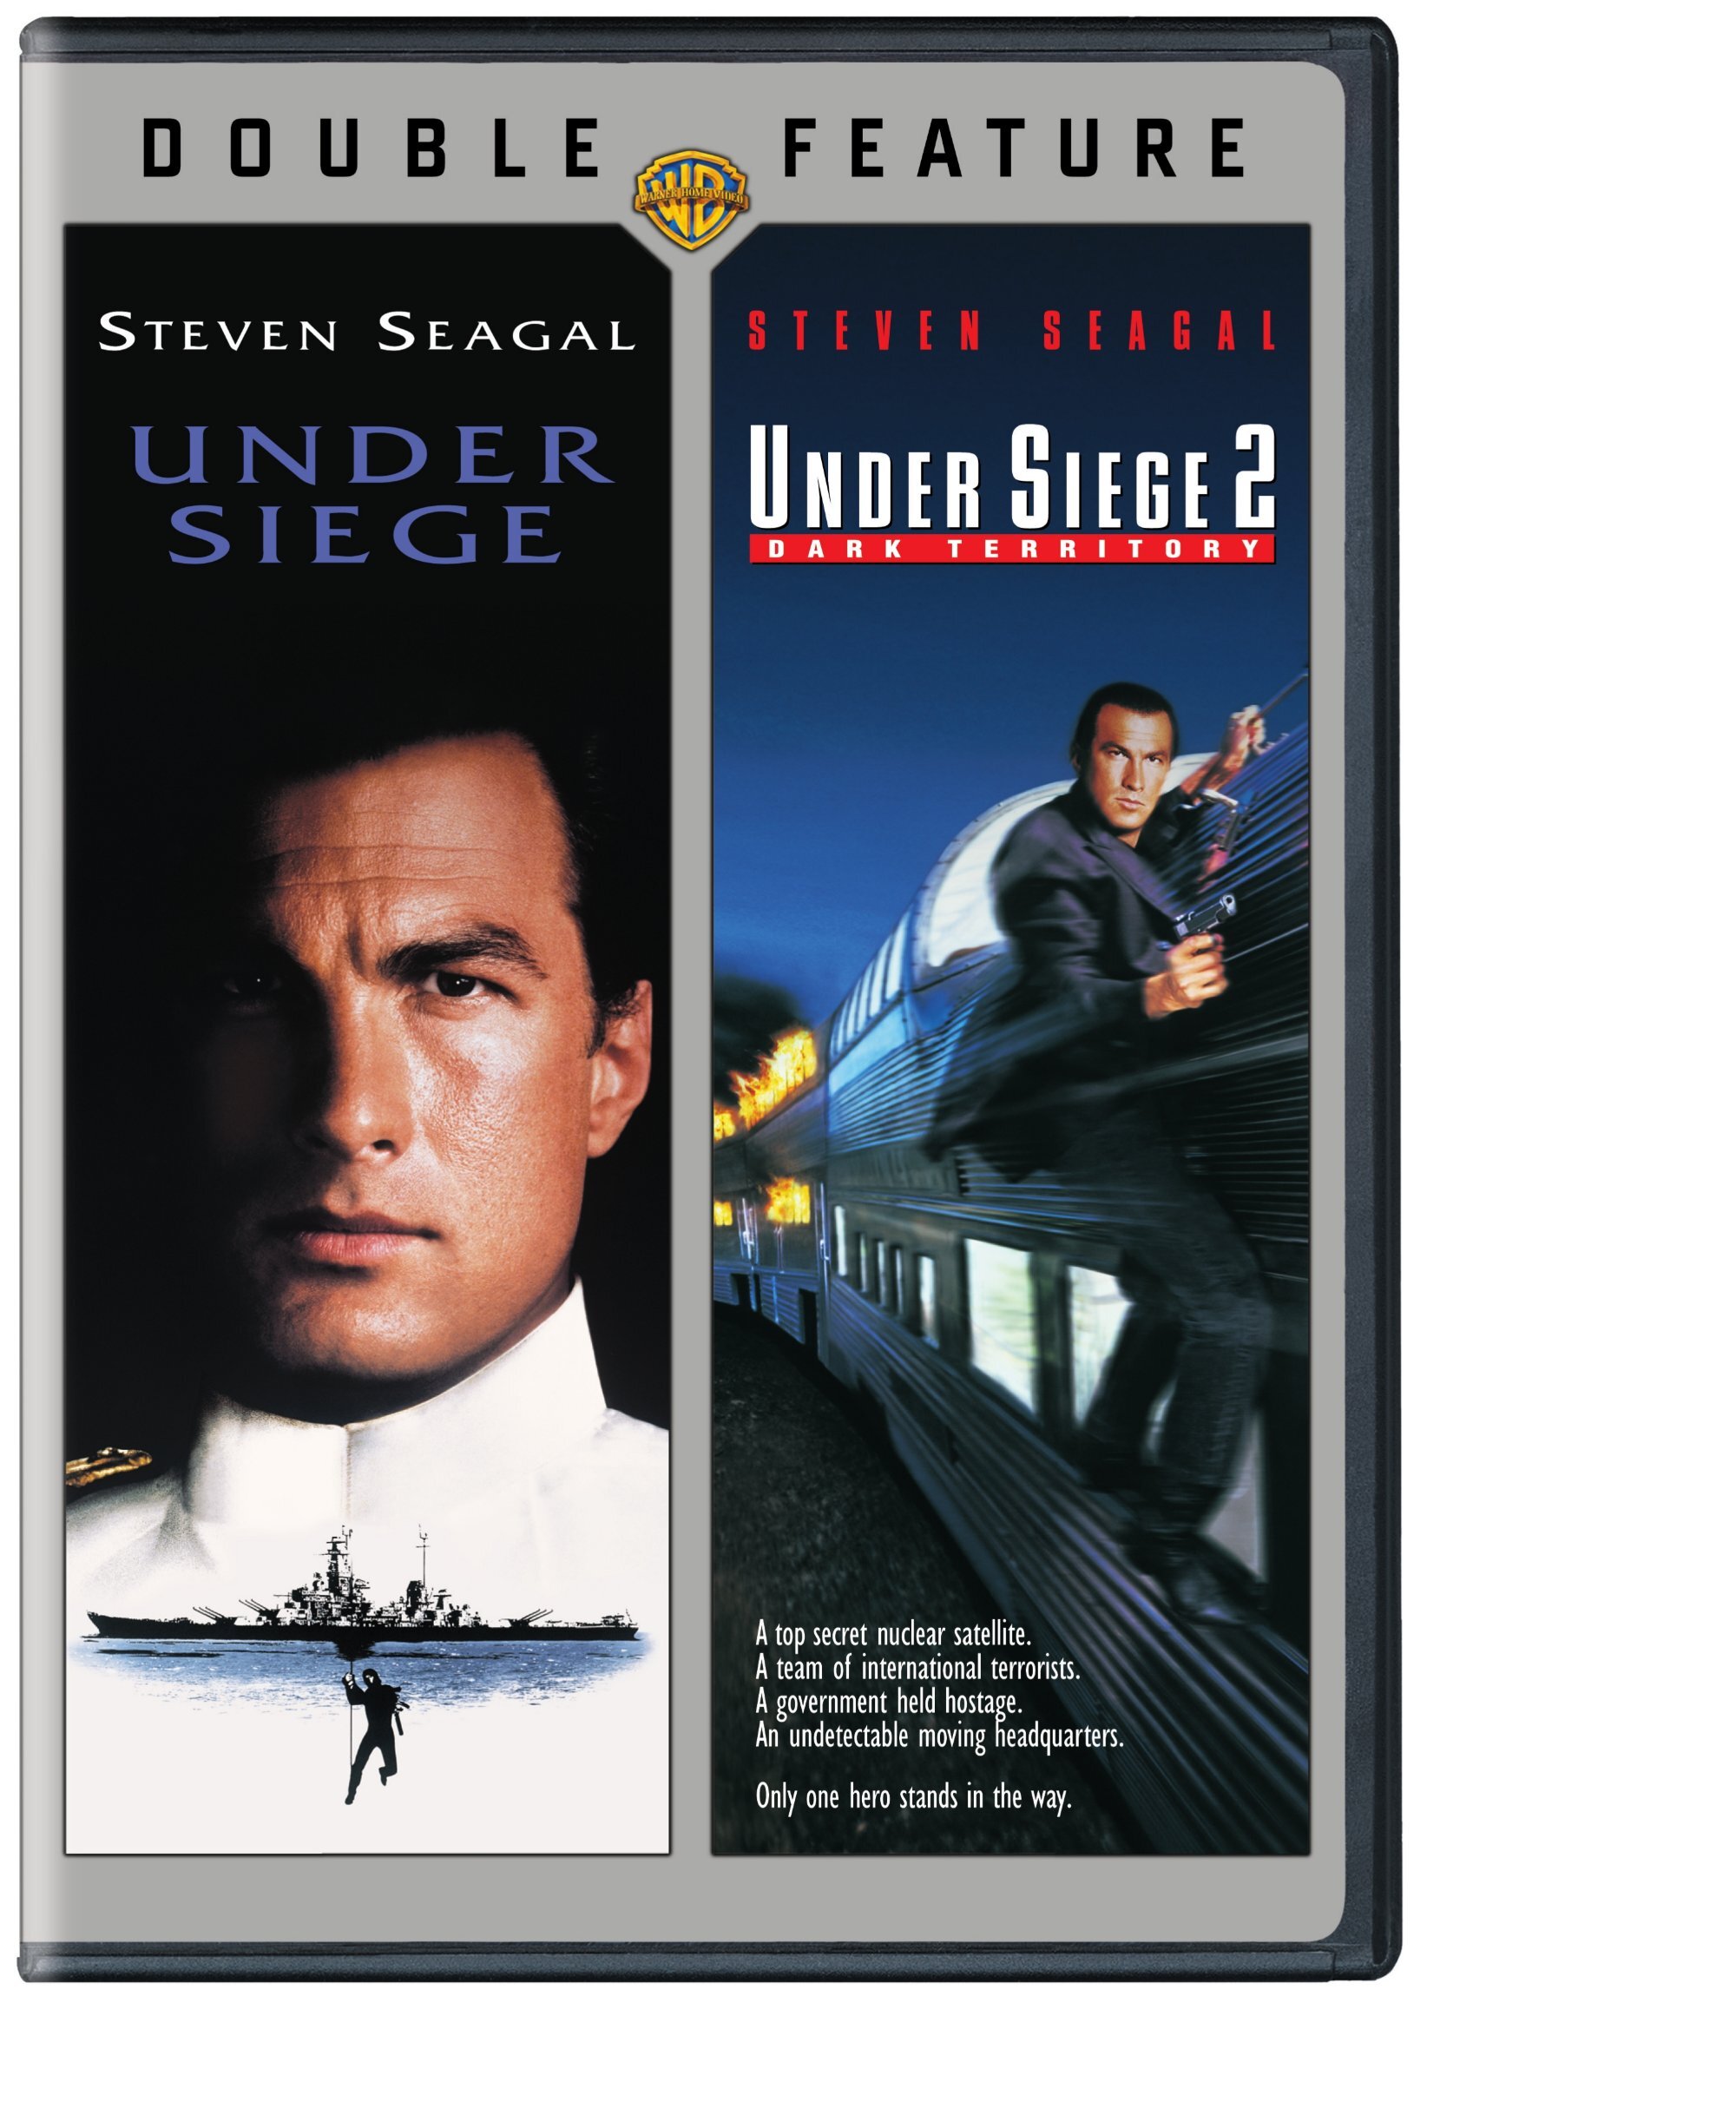 Under Siege/Under Siege 2 - Dark Territory (DVD Double Feature) - DVD [ 1995 ]  - Action Movies On DVD - Movies On GRUV